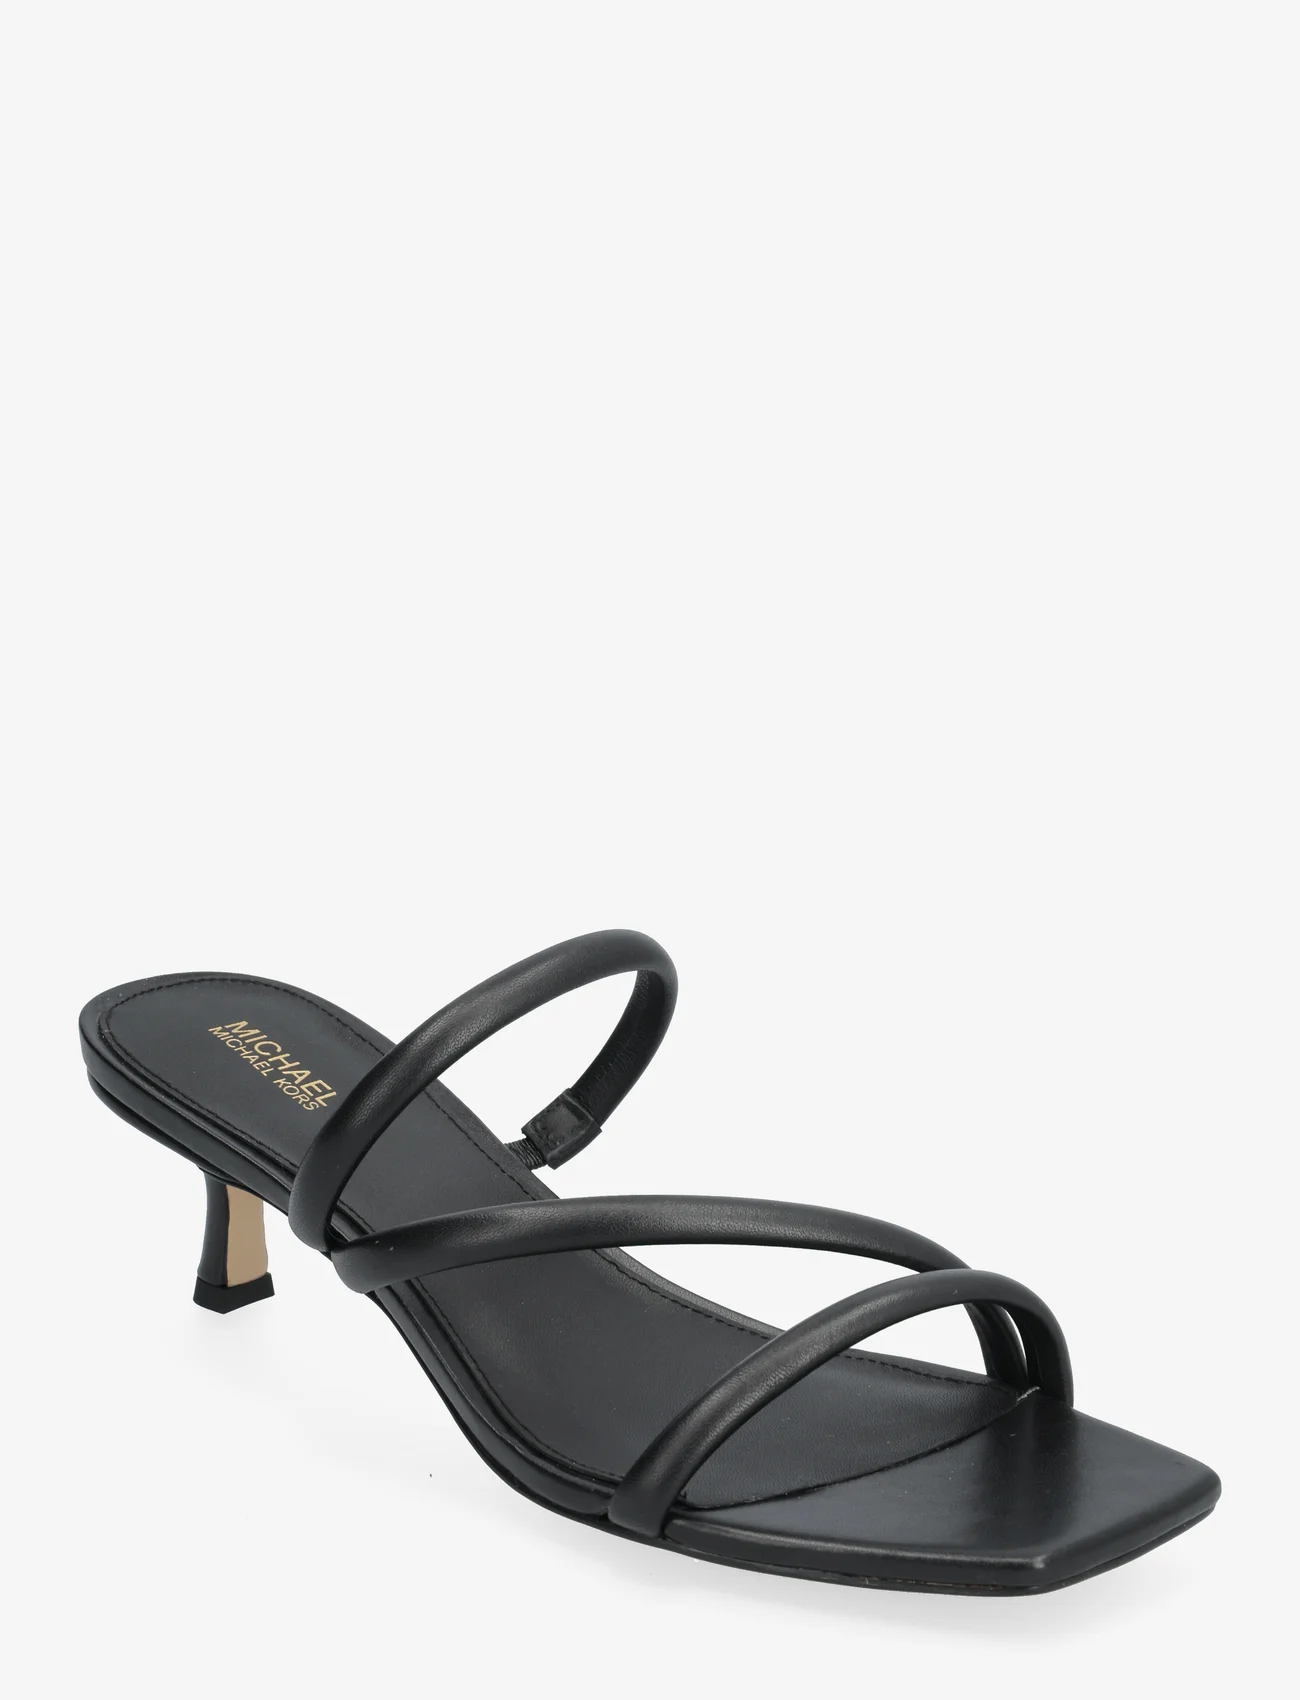 Michael Kors - CELIA KITTEN SLIDE - heeled sandals - black - 0